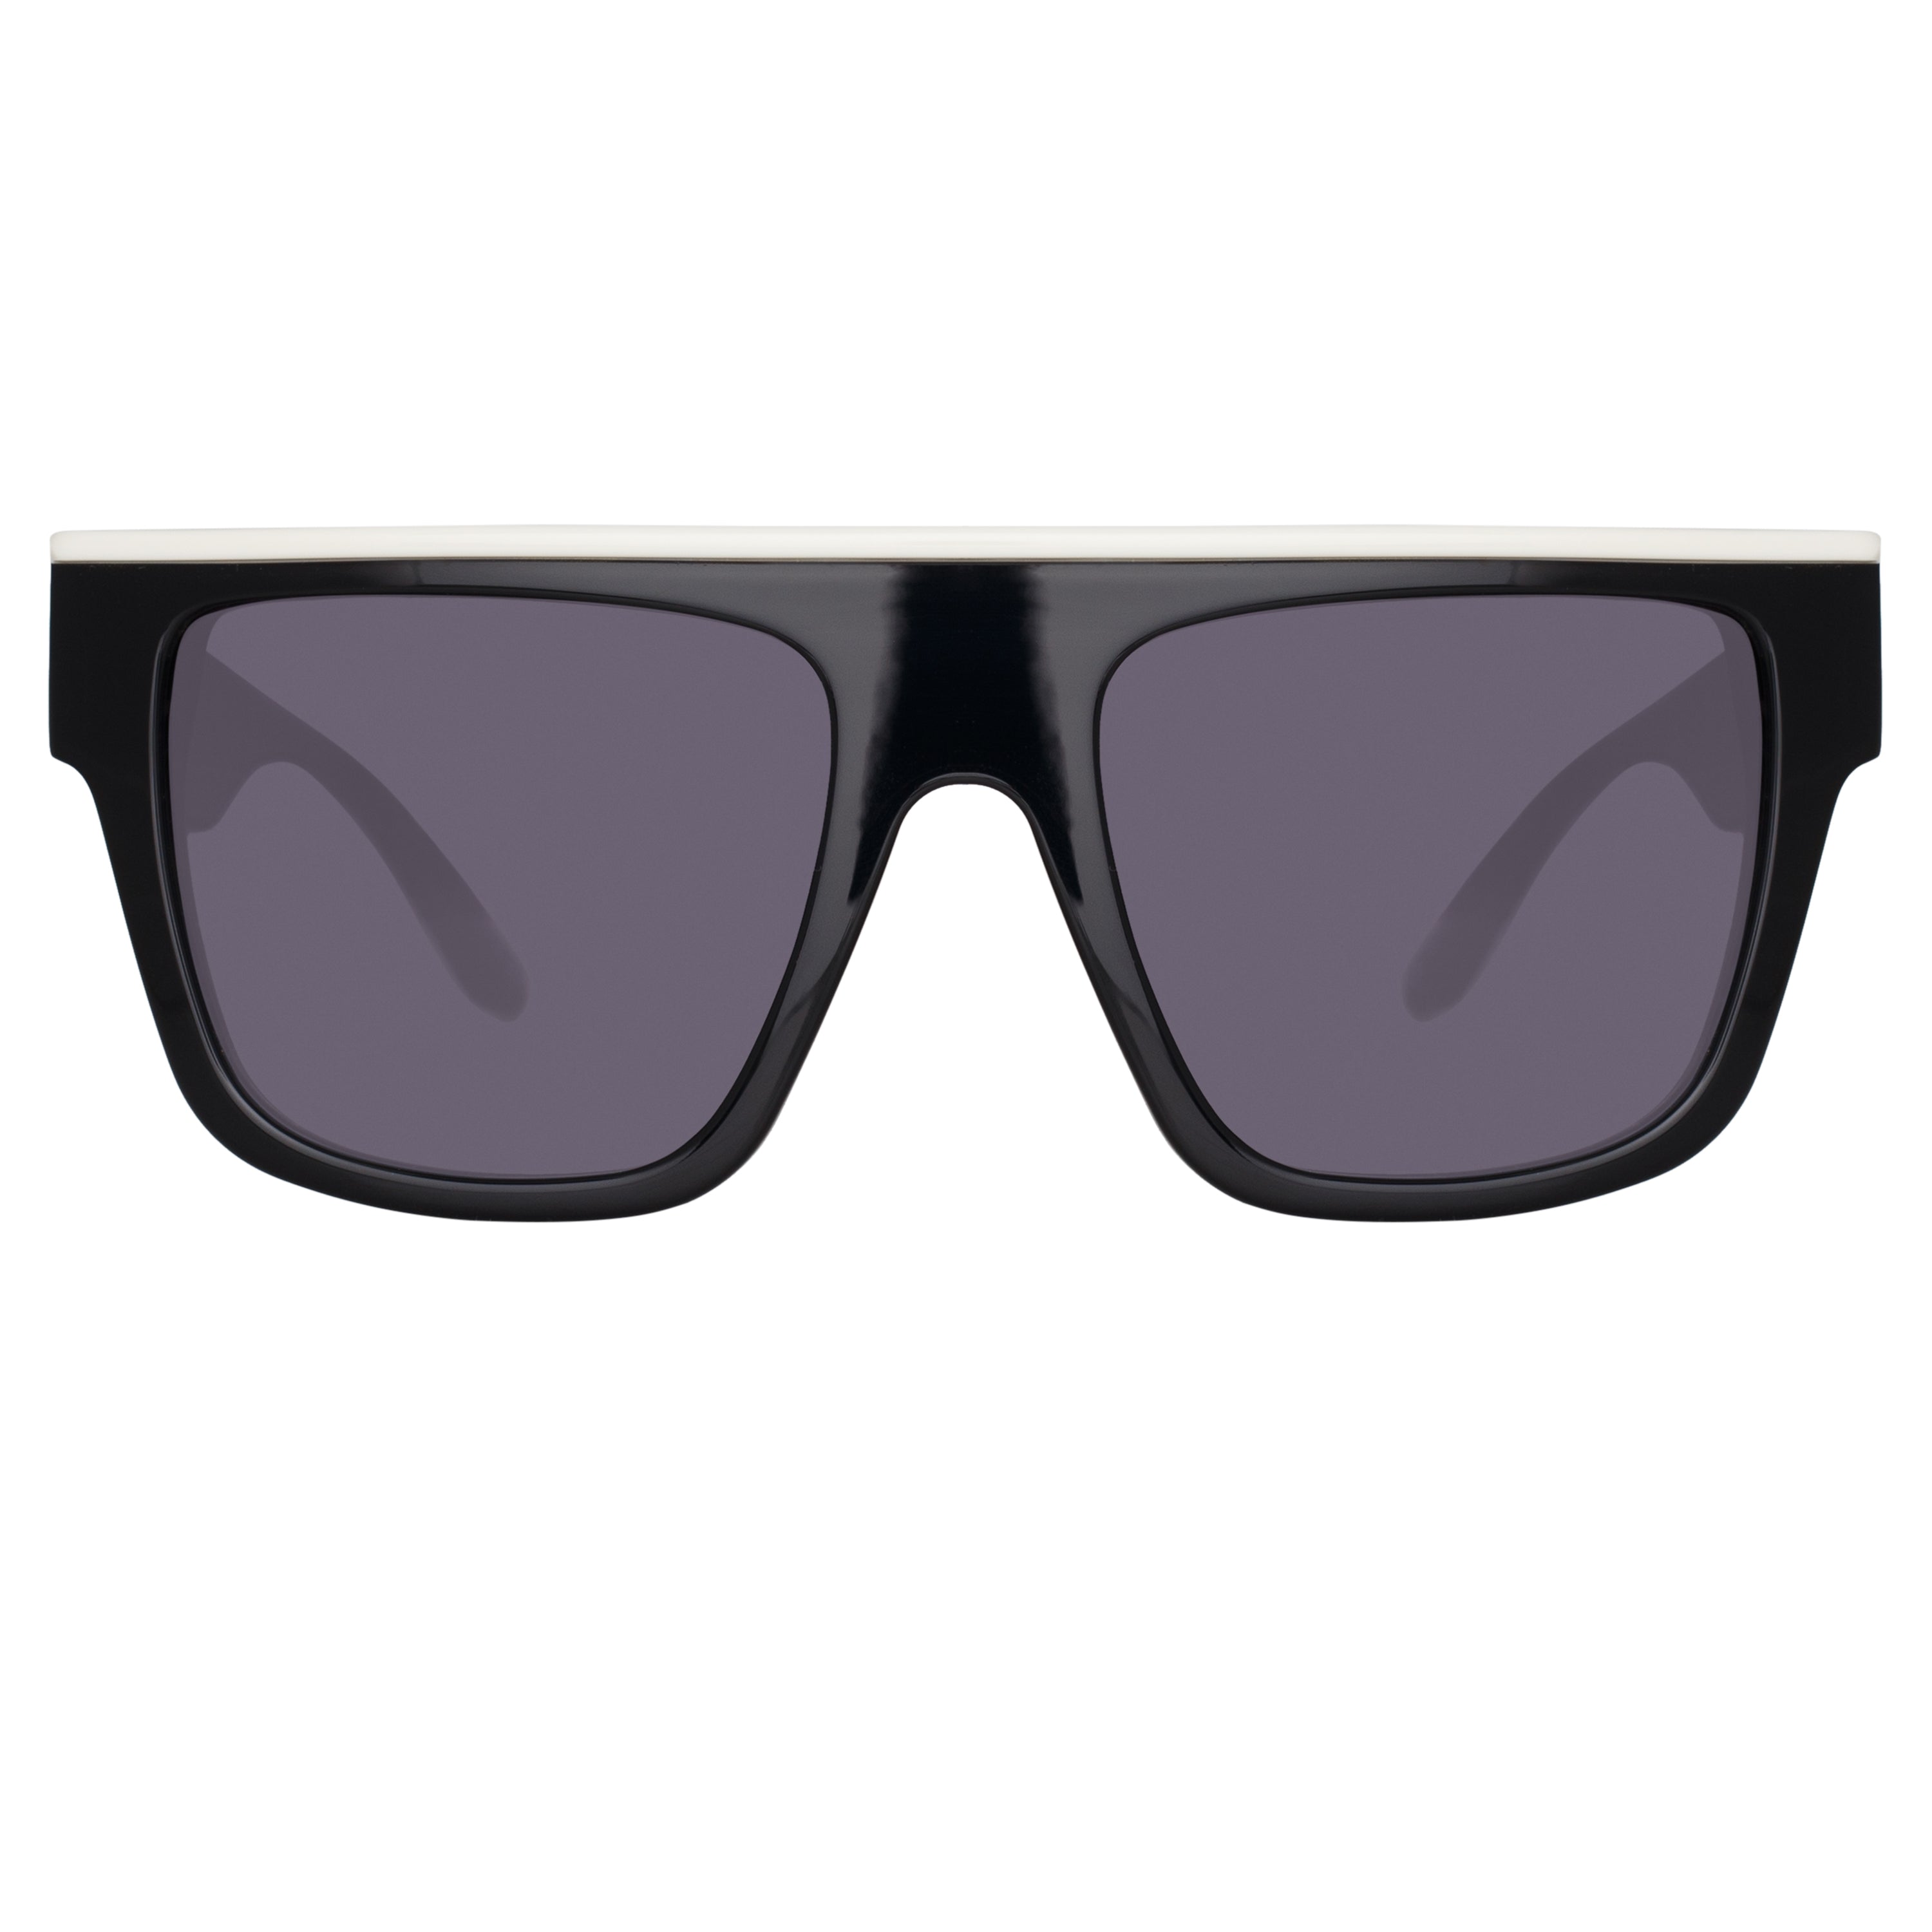 Magda Butrym x LF Flat White Top Sunglasses in Black